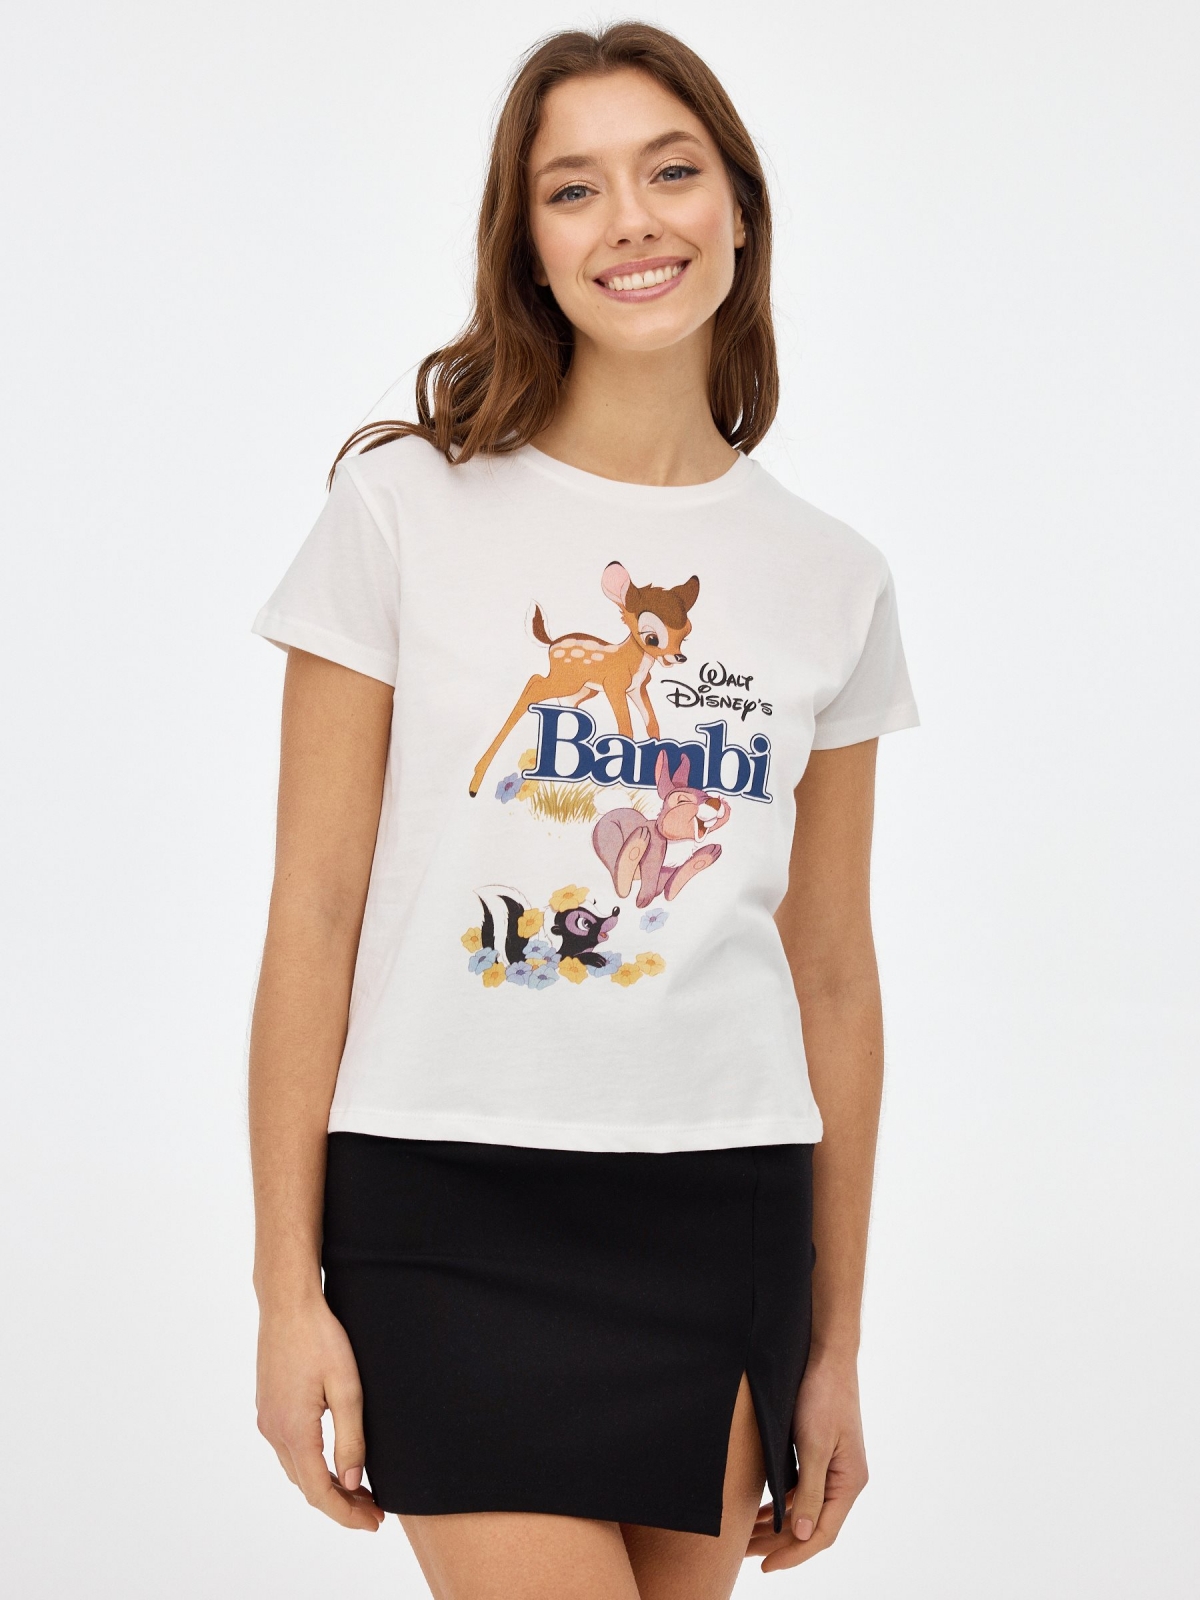 Camiseta Bambi blanco roto vista media frontal